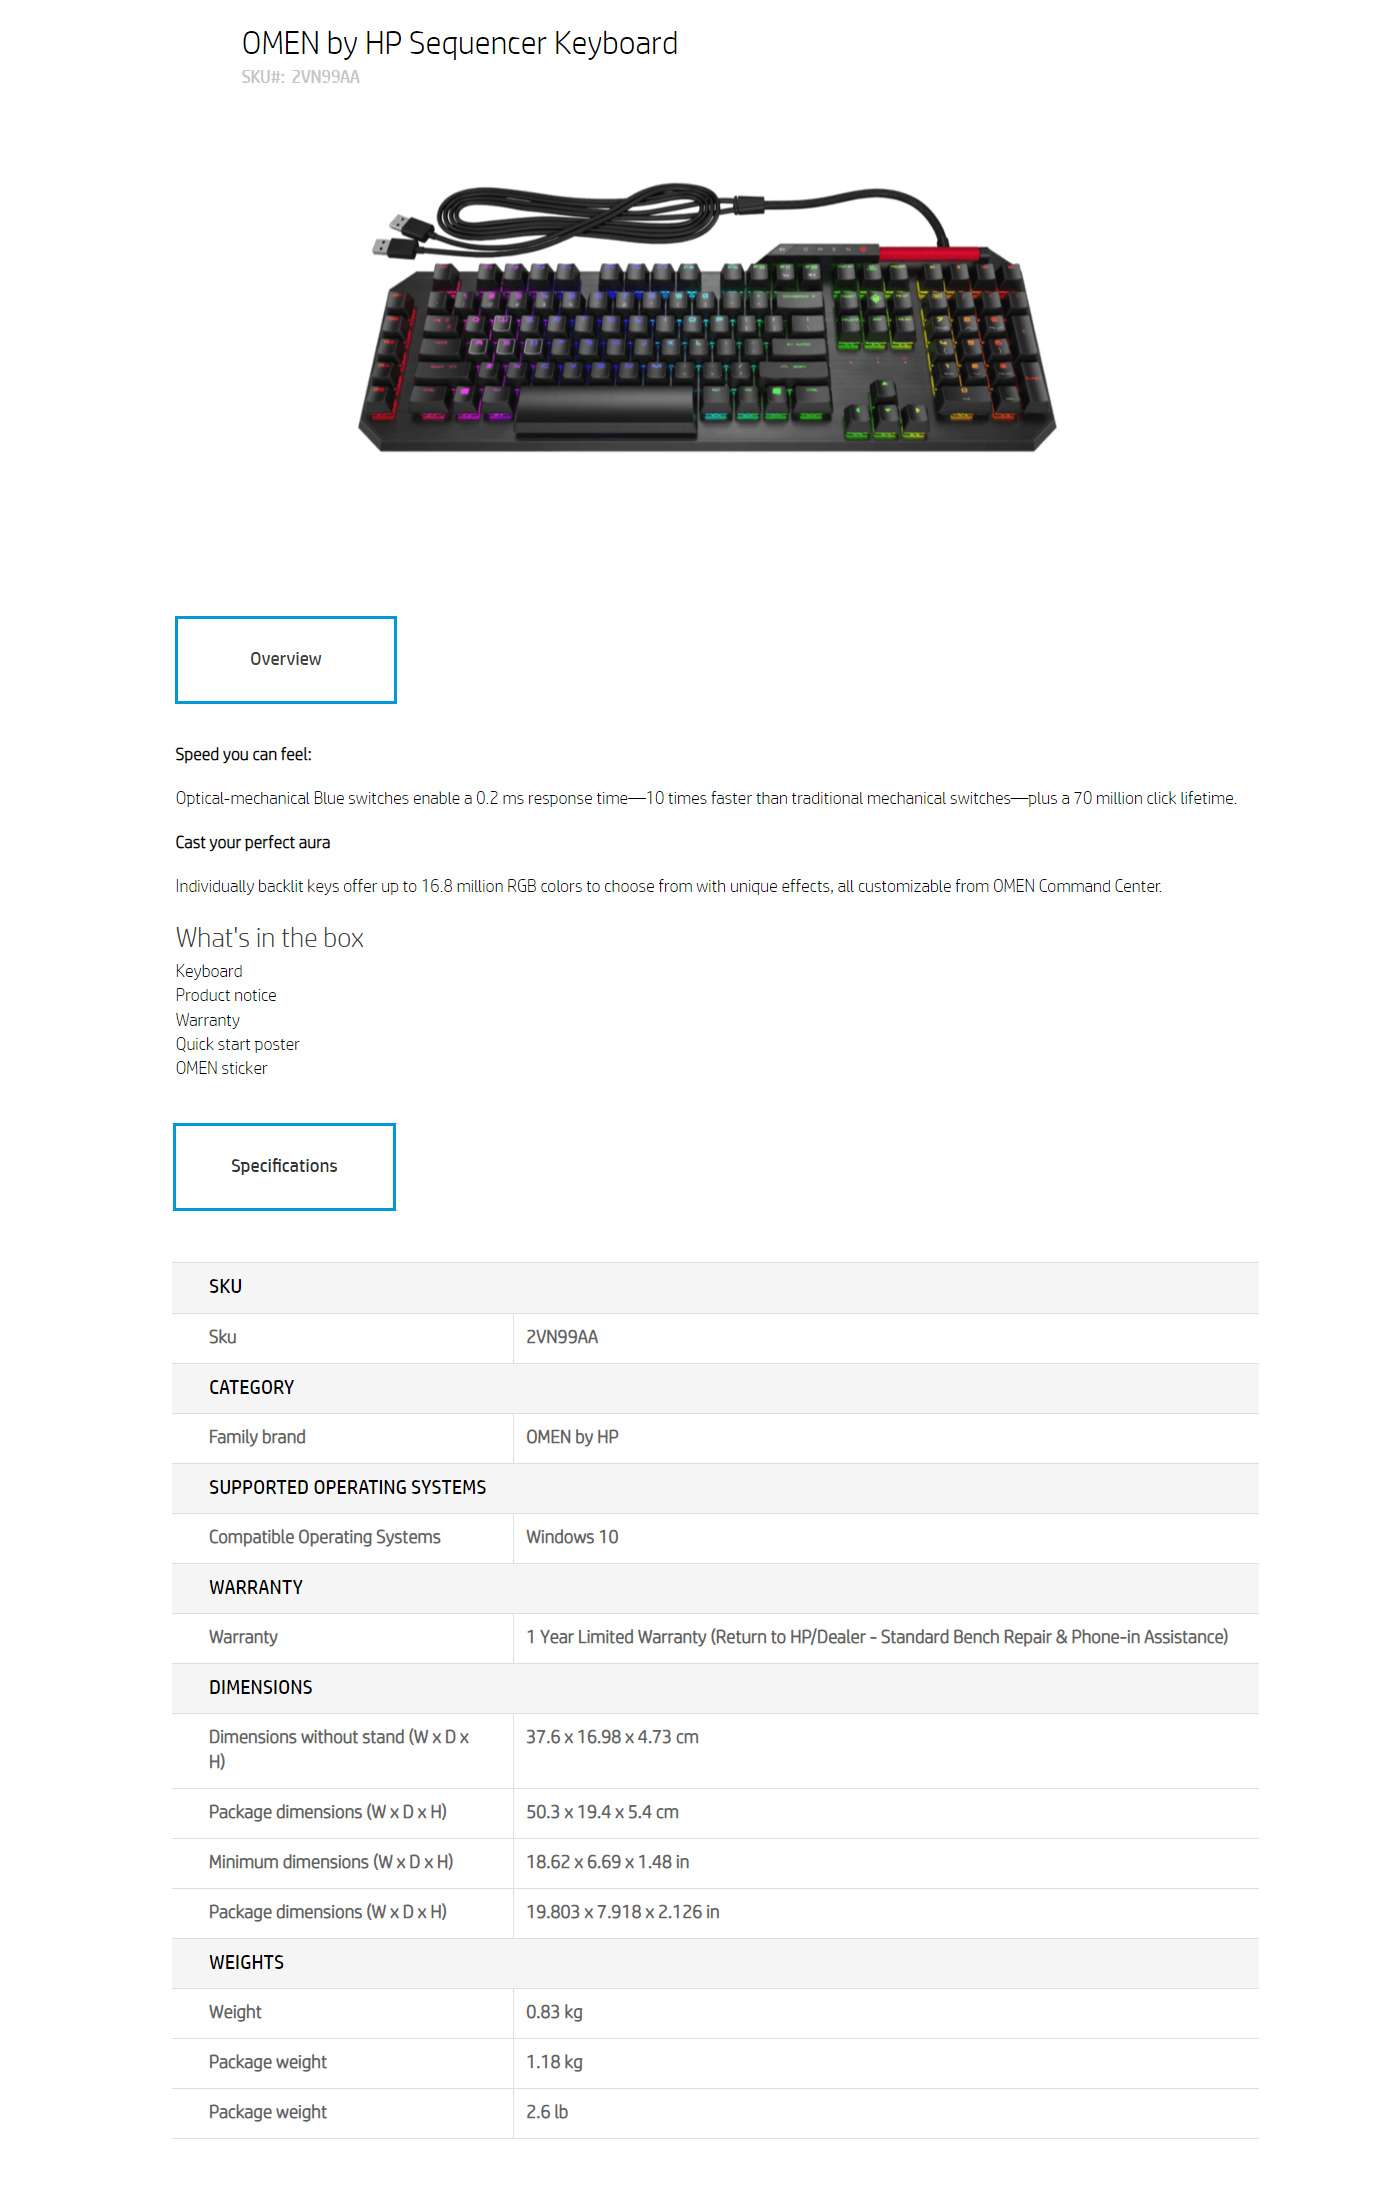  Buy Online HP OMEN Sequencer Keyboard (2VN99AA)